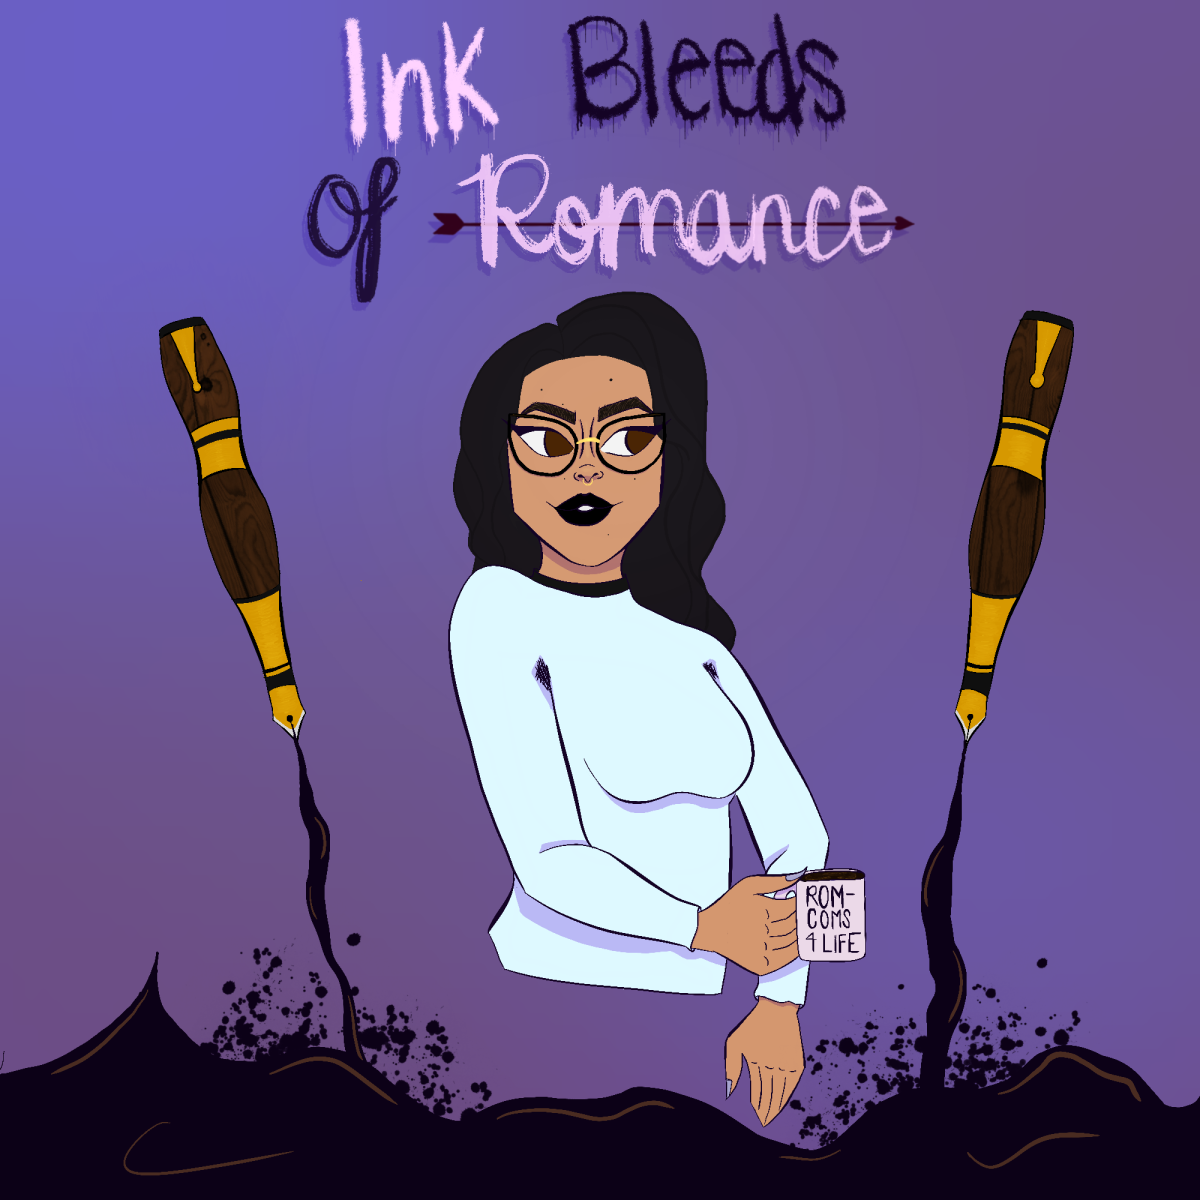 Ink Bleeds of Romance